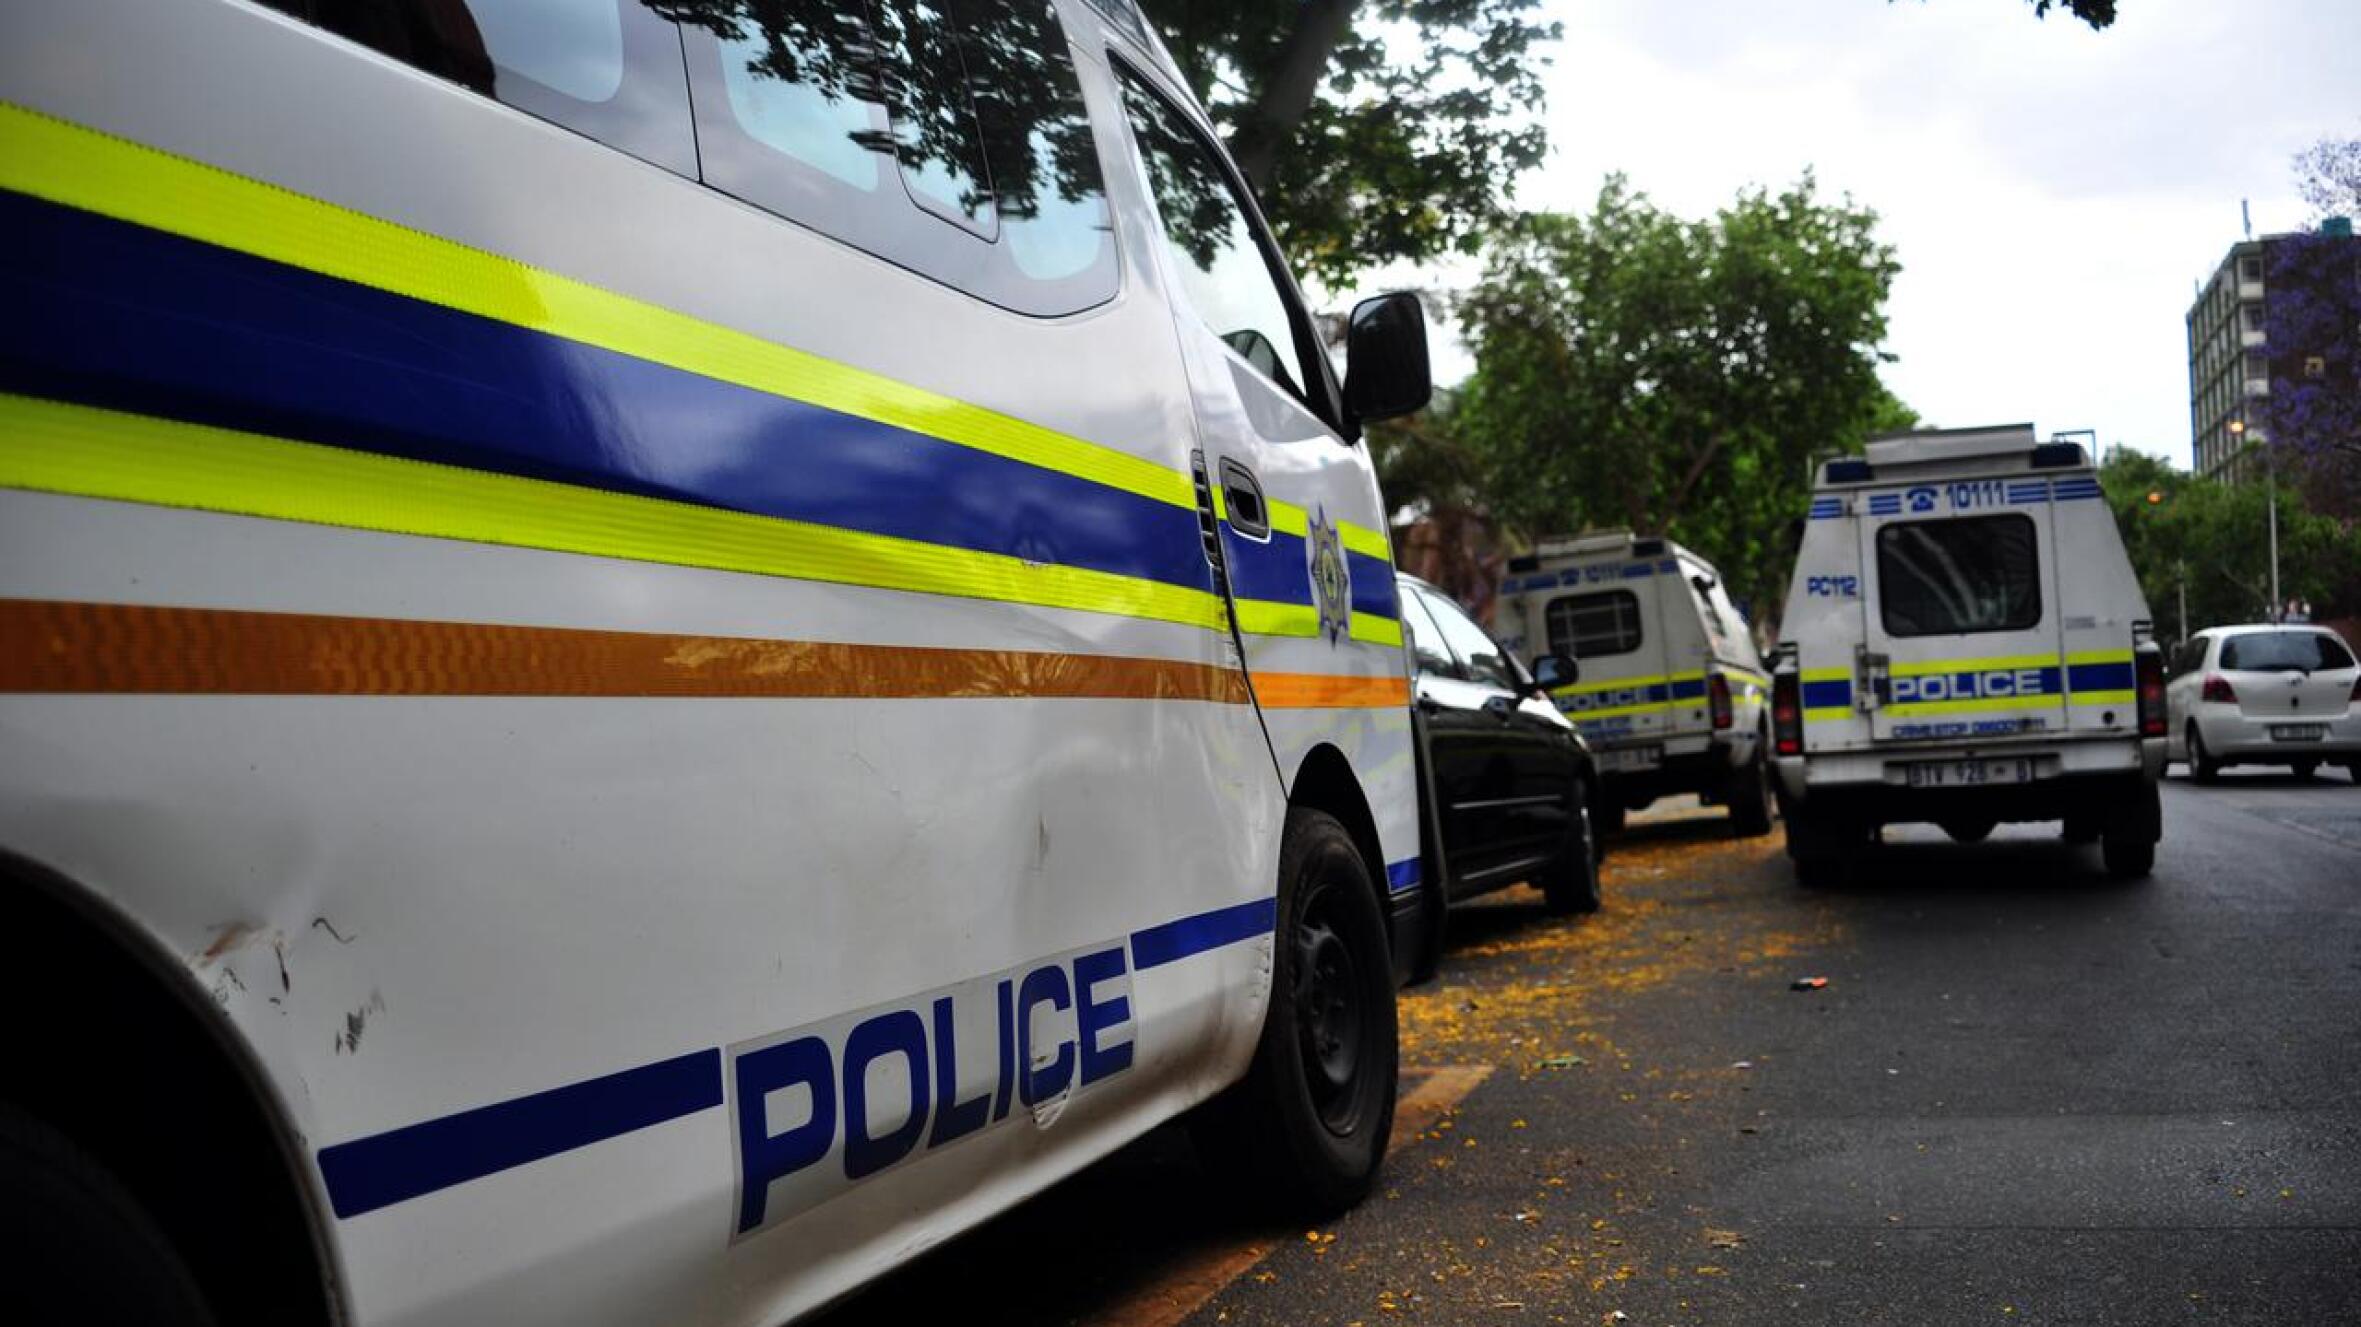 Police patrol van in Pretoria.